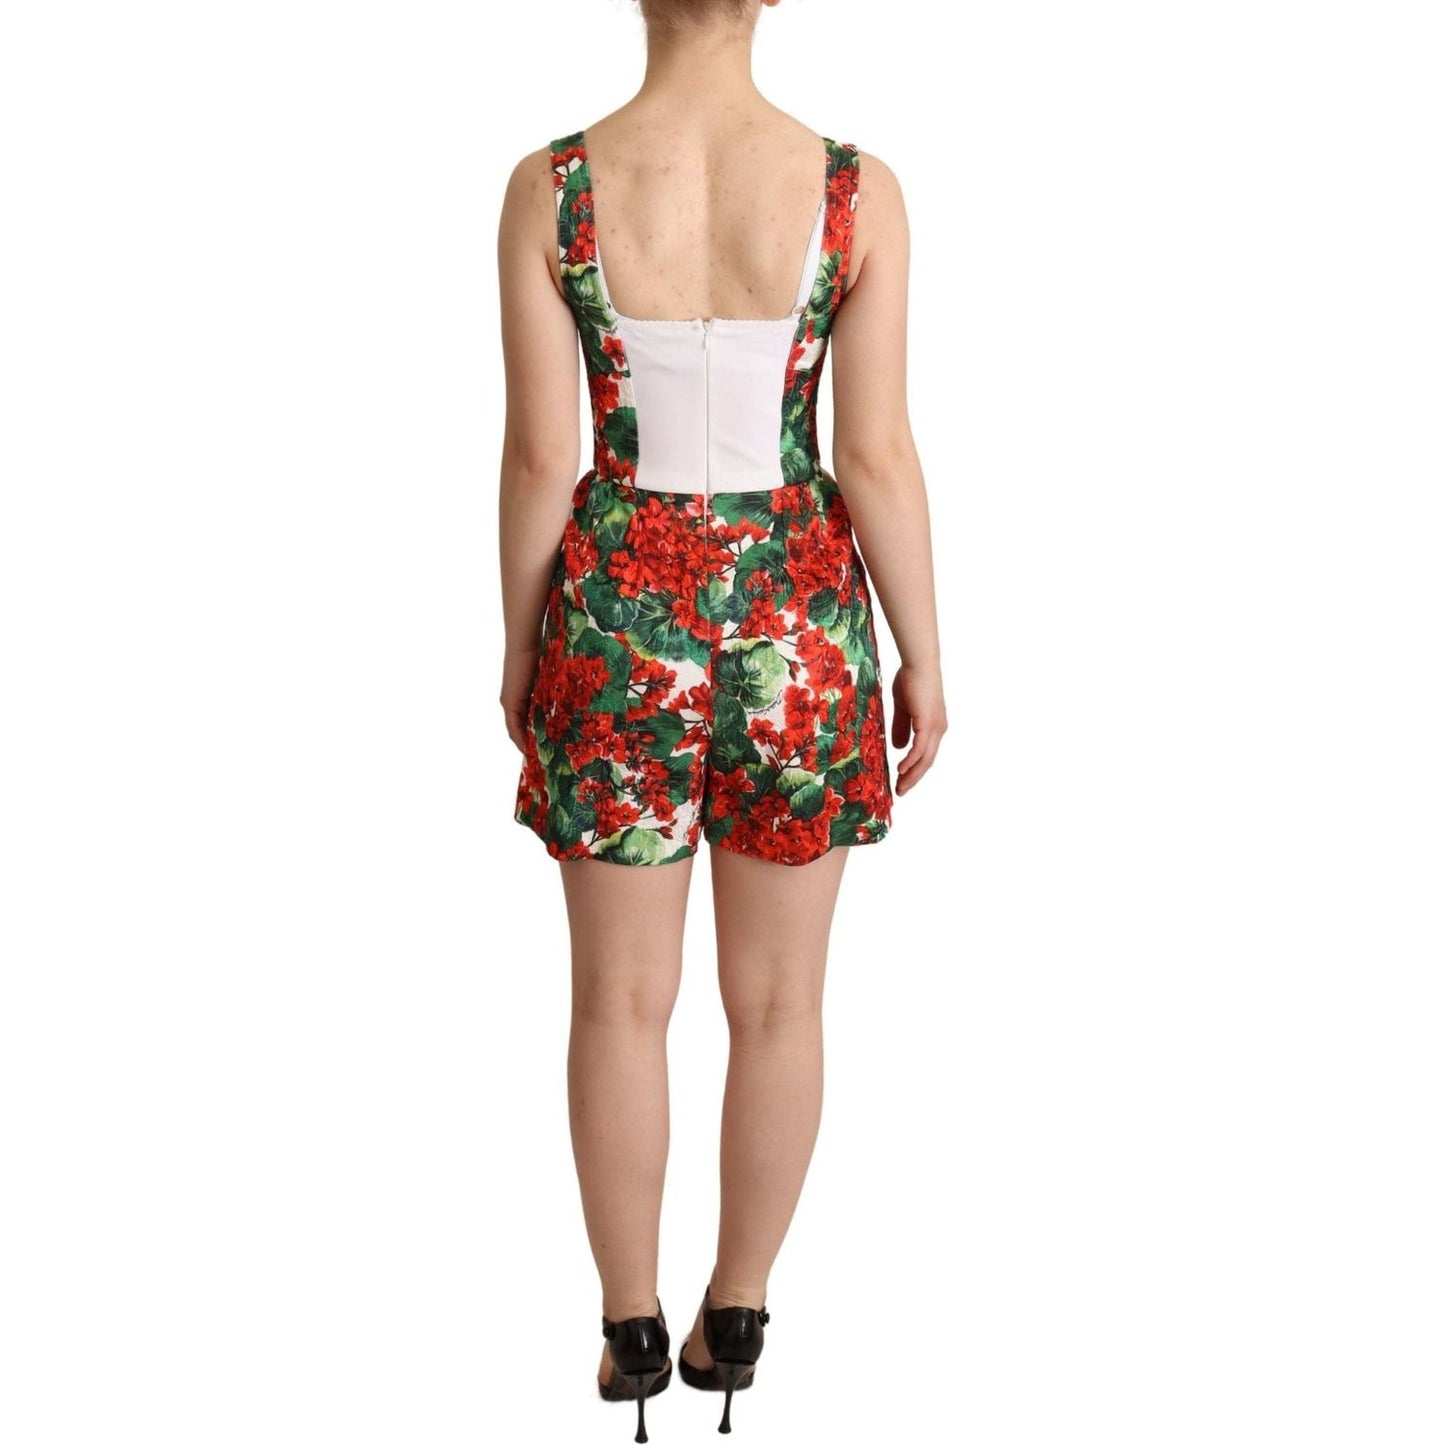 Dolce & Gabbana Chic Red Geranium Print Sleeveless Jumpsuit WOMAN DRESSES red-geranium-print-shorts-jumpsuit-dress IMG_0805-scaled-f6ba56f9-78a.jpg